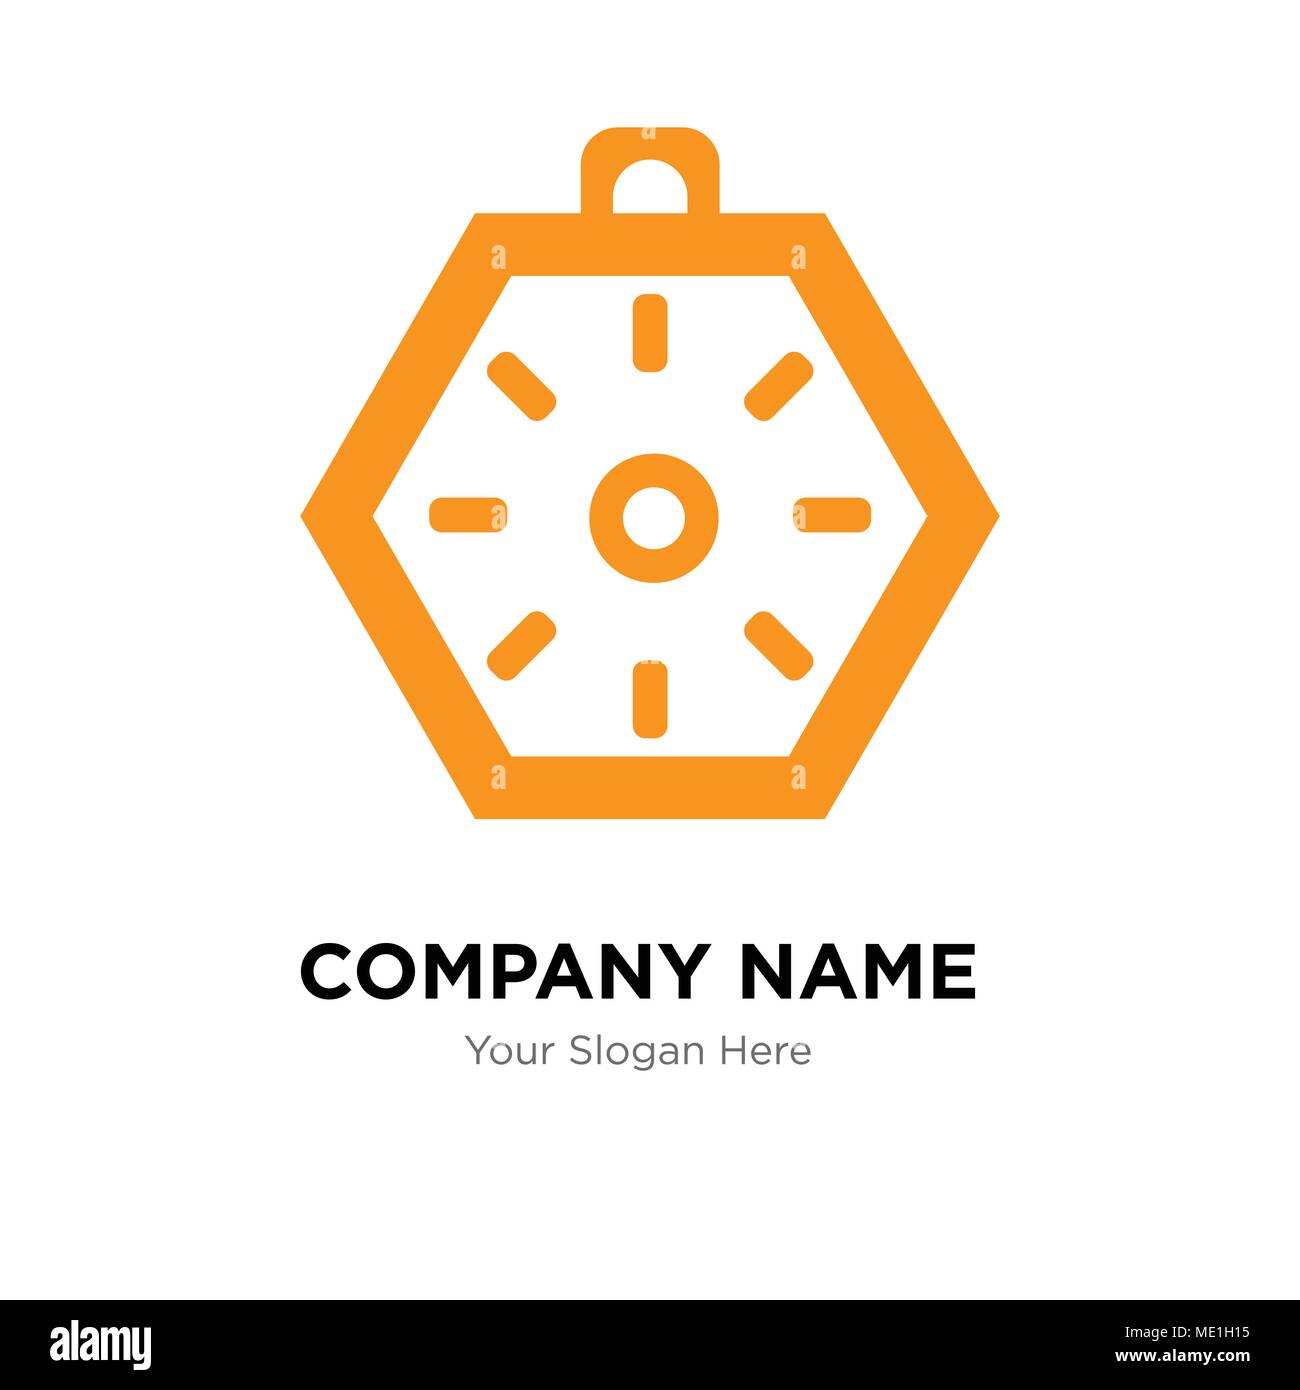 Lokalisierung Ausrichtung Werkzeug der Kompass mit Himmelsrichtungen Company Logo Design Template, Business corporate Vektor icon Stock Vektor